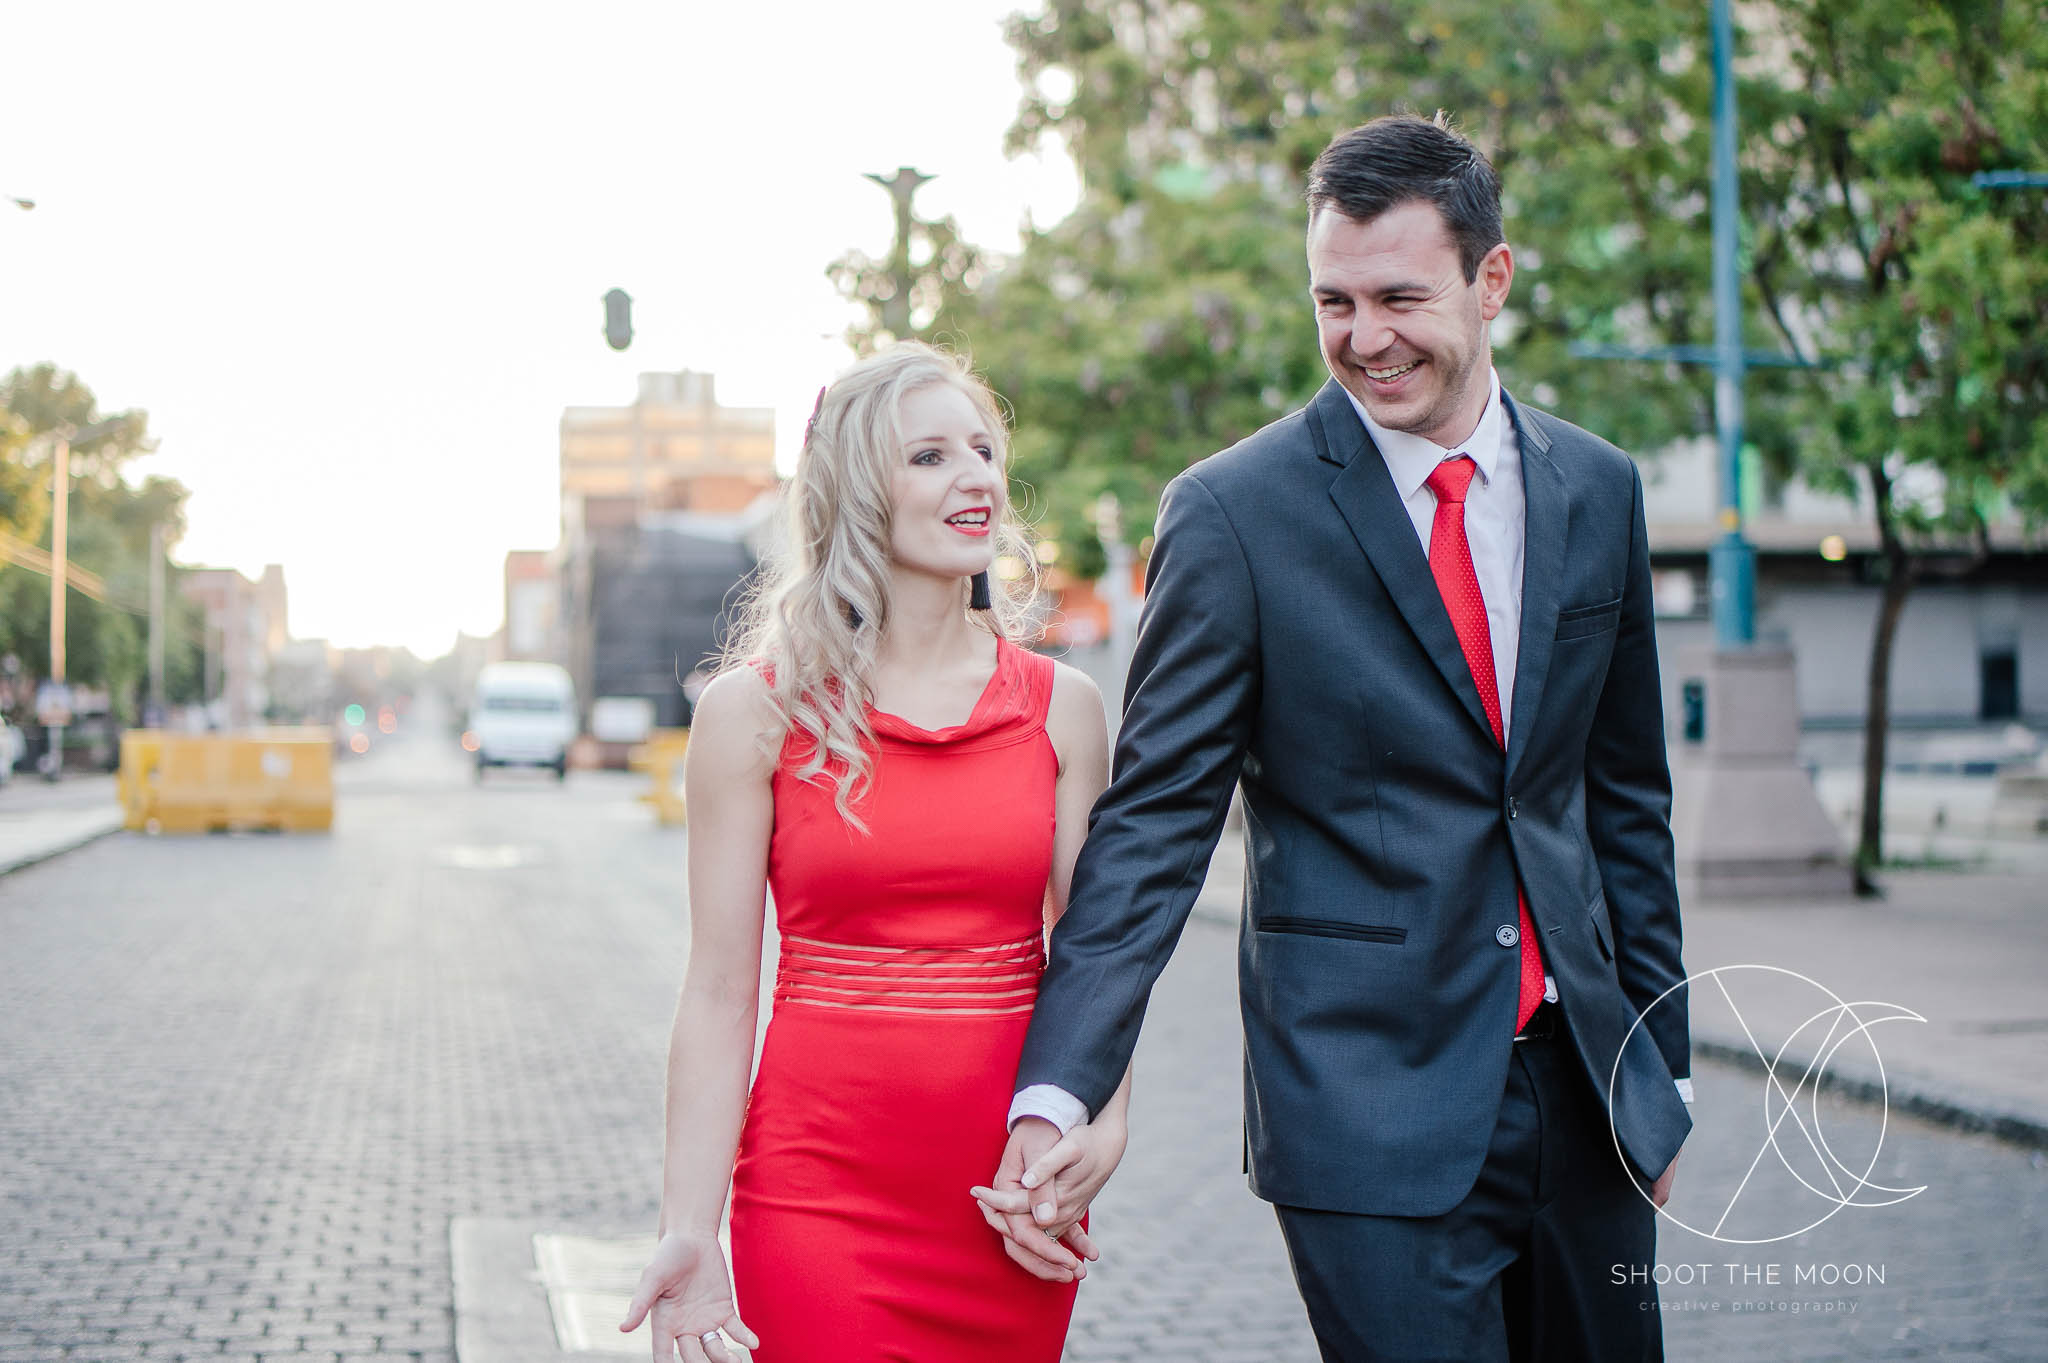 editorial couples anniversary photoshoot in pretoria city streets